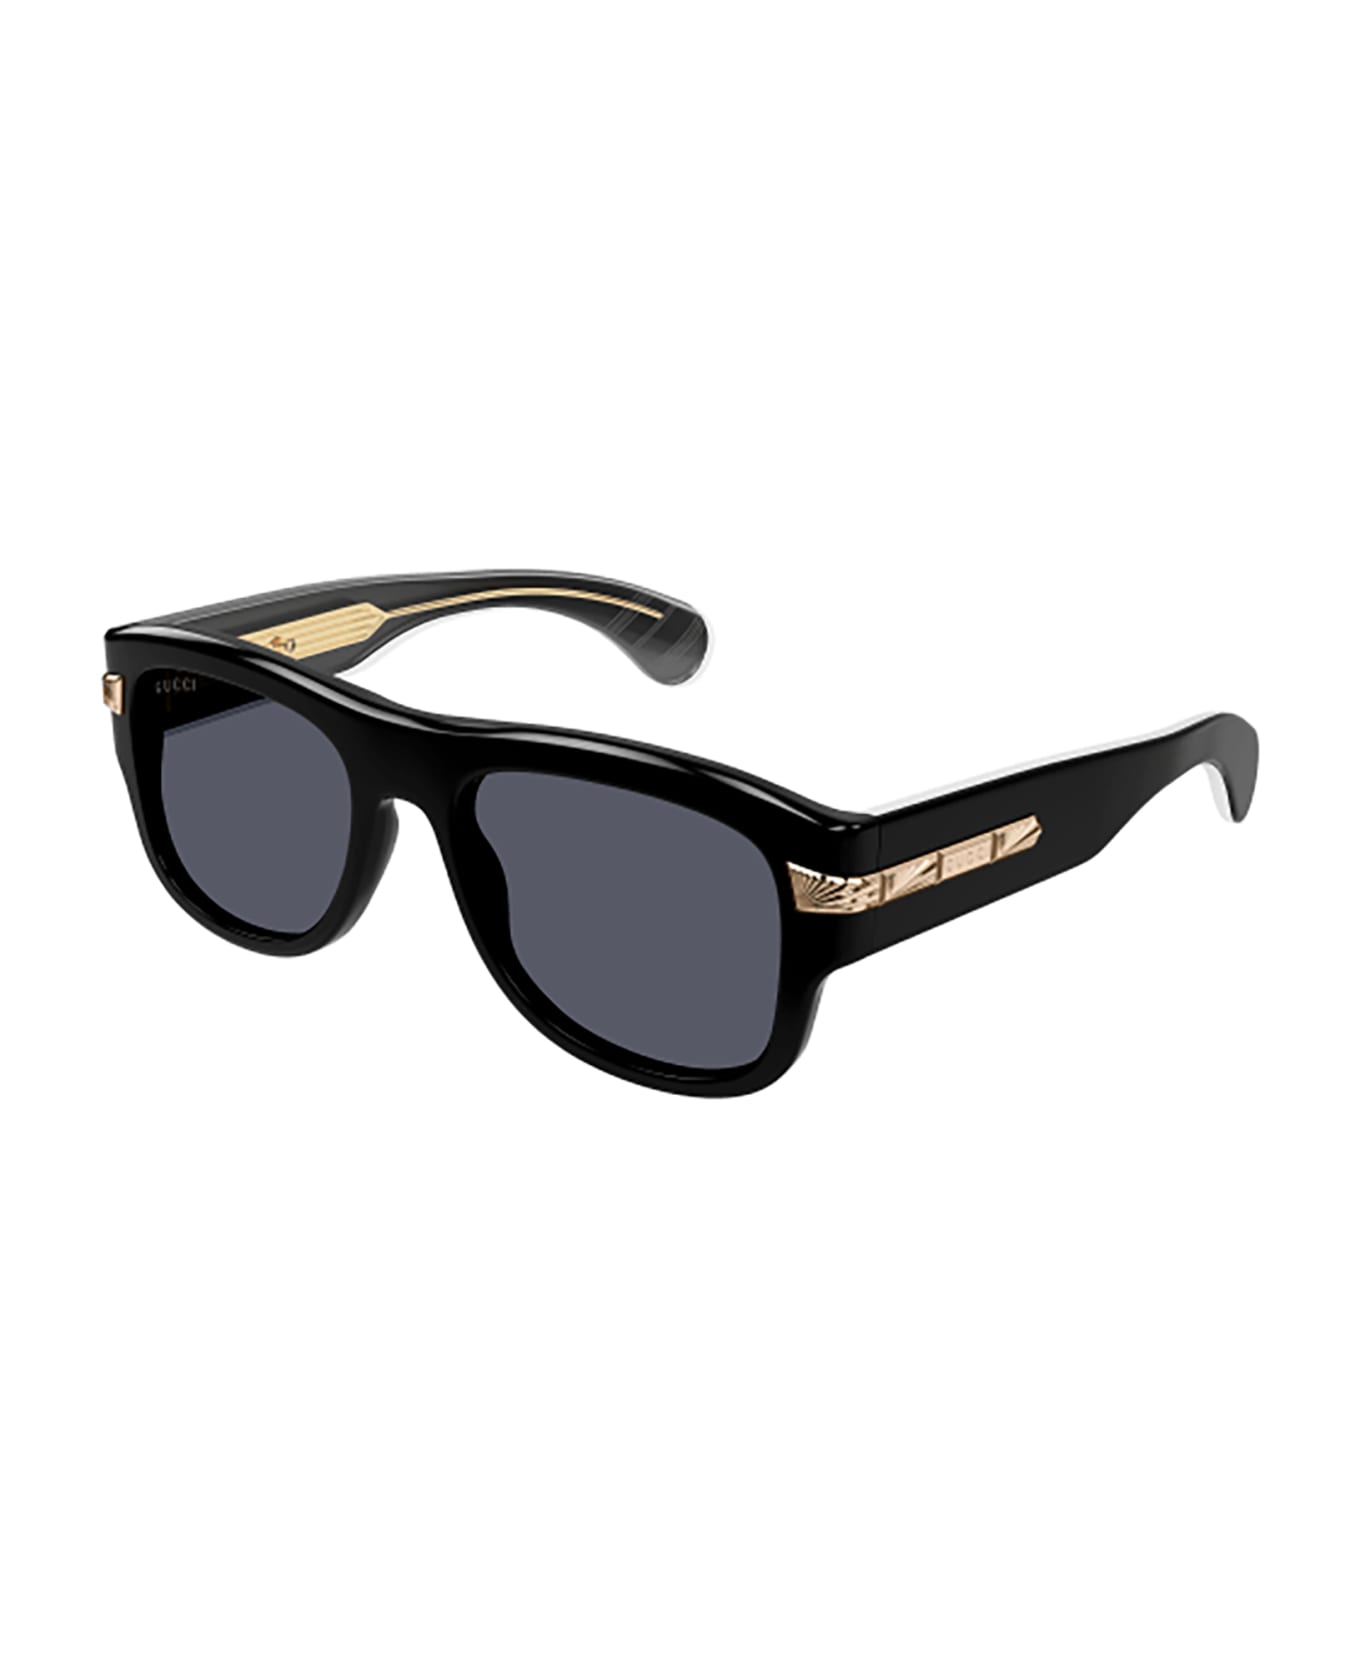 Gucci Eyewear Gg1517s Sunglasses - 001 black black grey サングラス